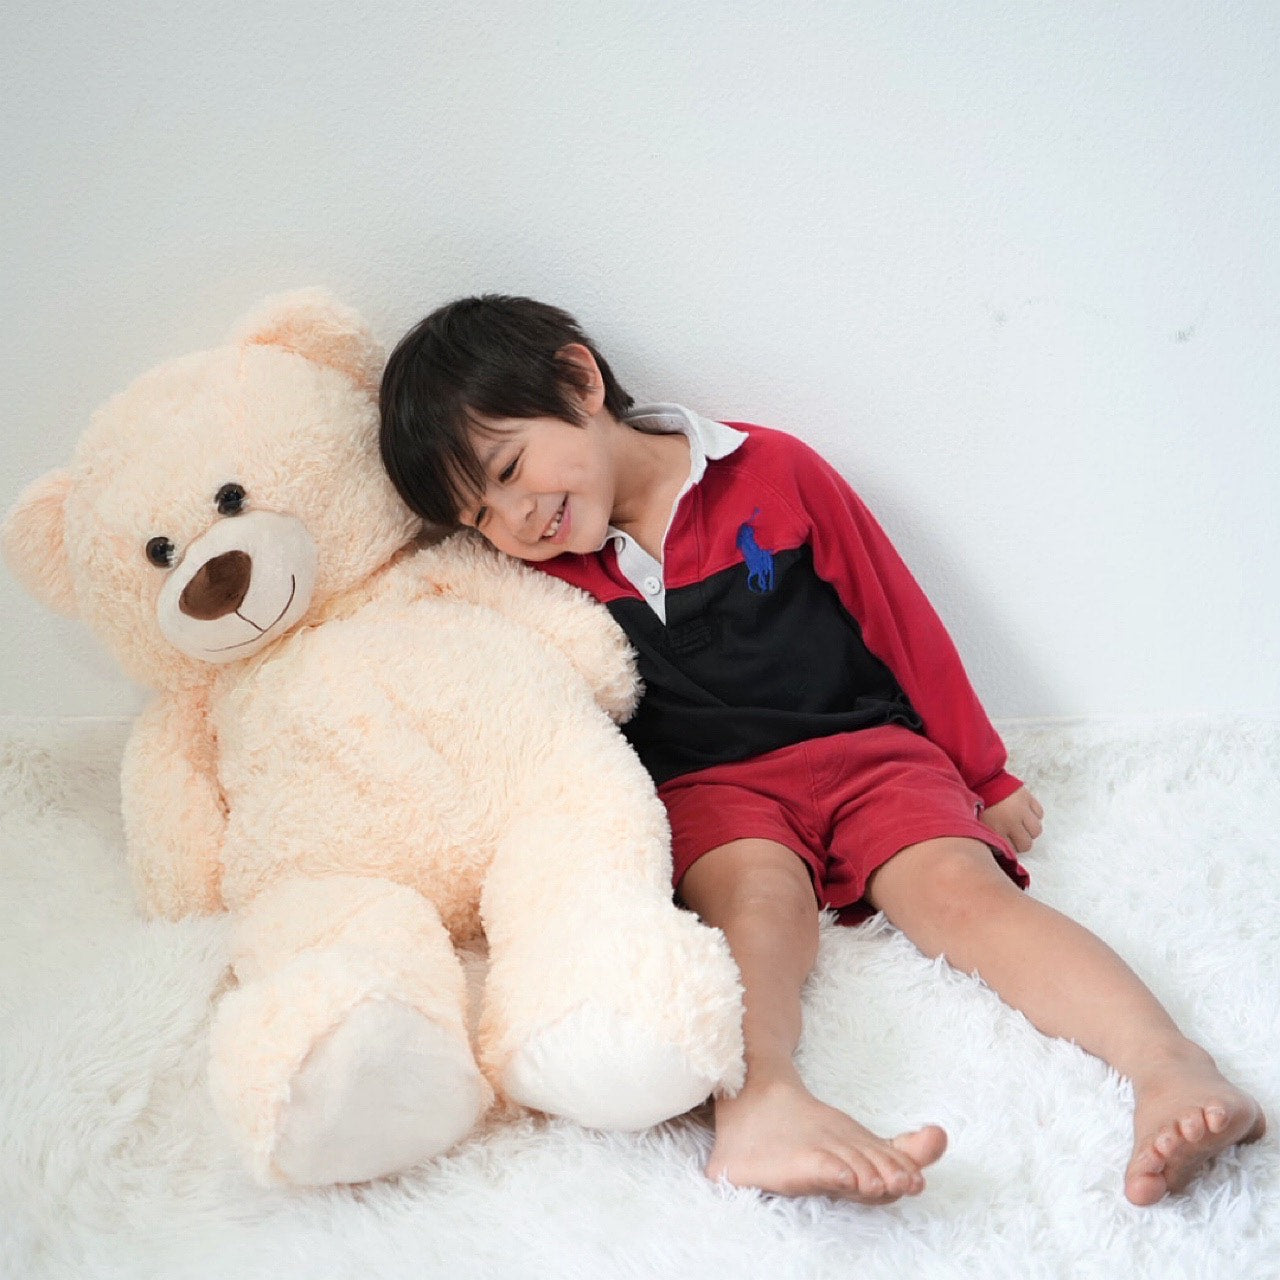 Giant Teddy Bear Plush Toy, Beige, 35.4/51 Inches - MorisMos Stuffed Animals